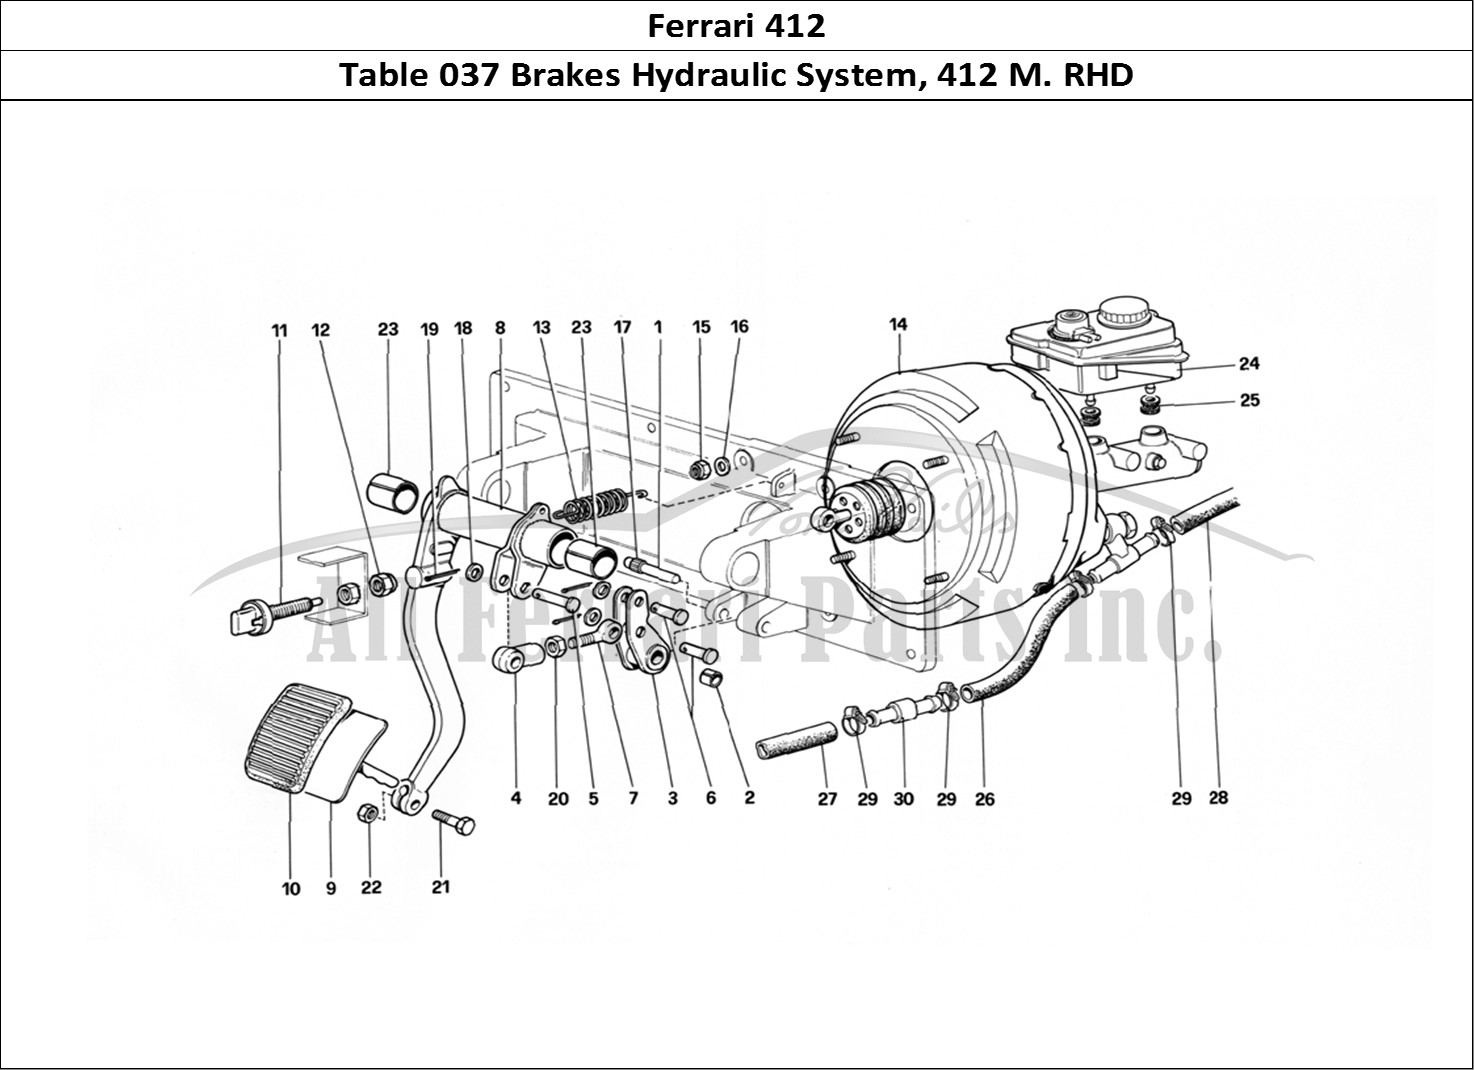 Ferrari Parts Ferrari 412 (Mechanical) Page 037 Brakes Hydraulic Control